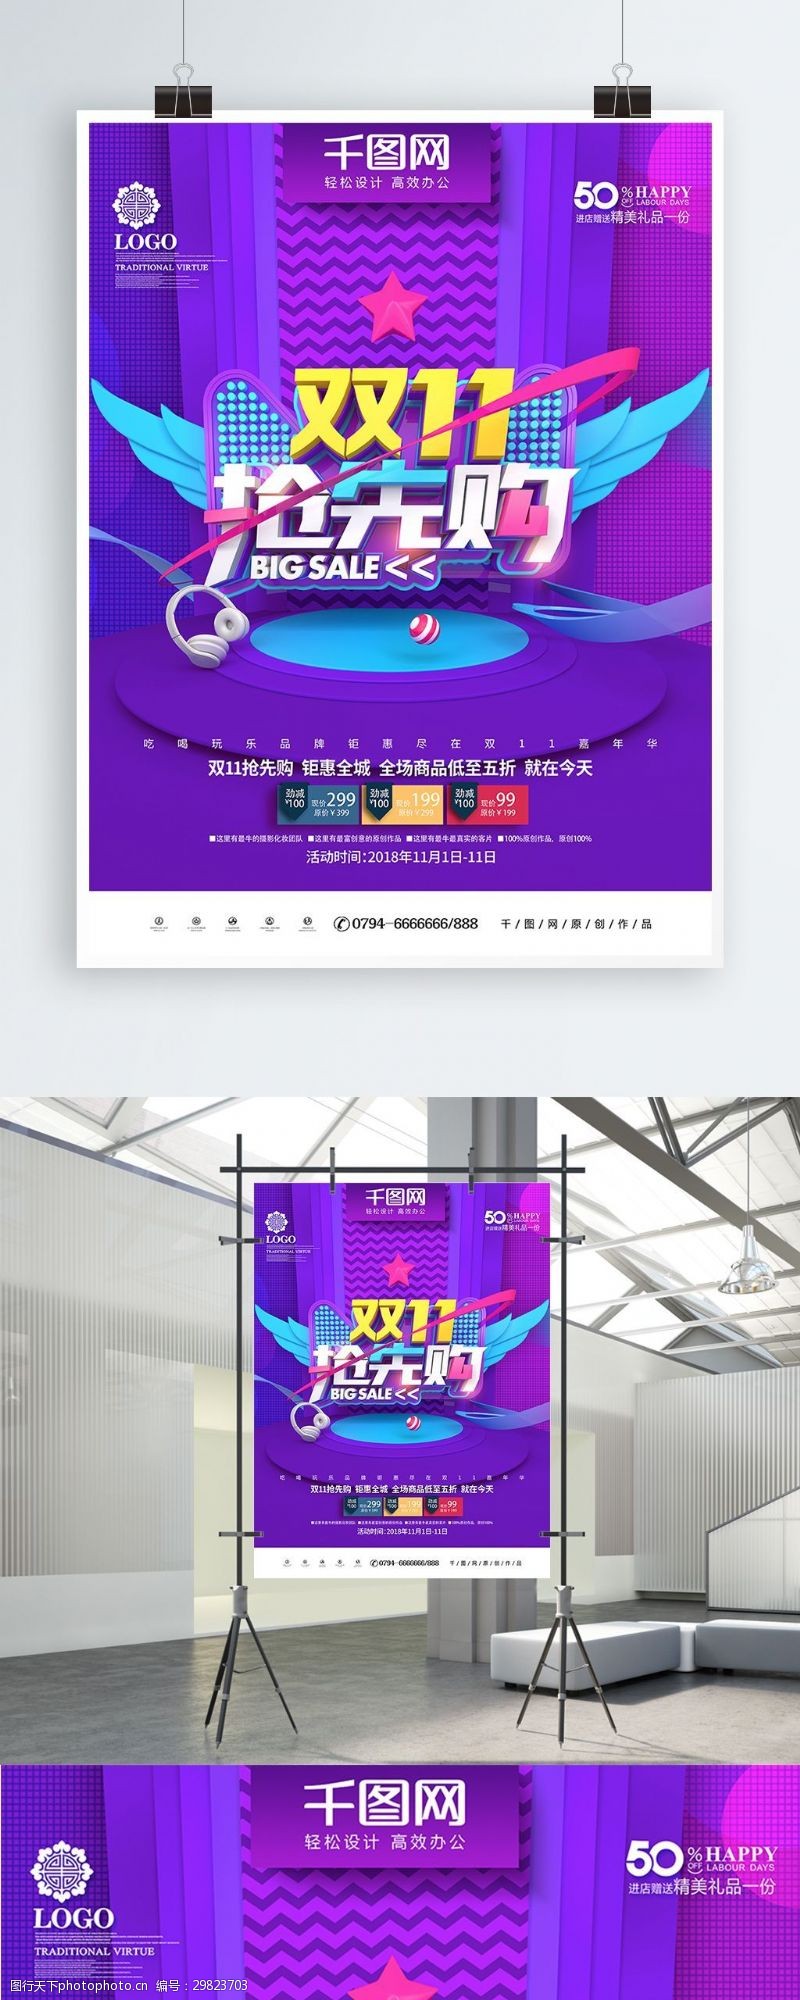 C4D紫色炫酷双11抢先购双11促销海报